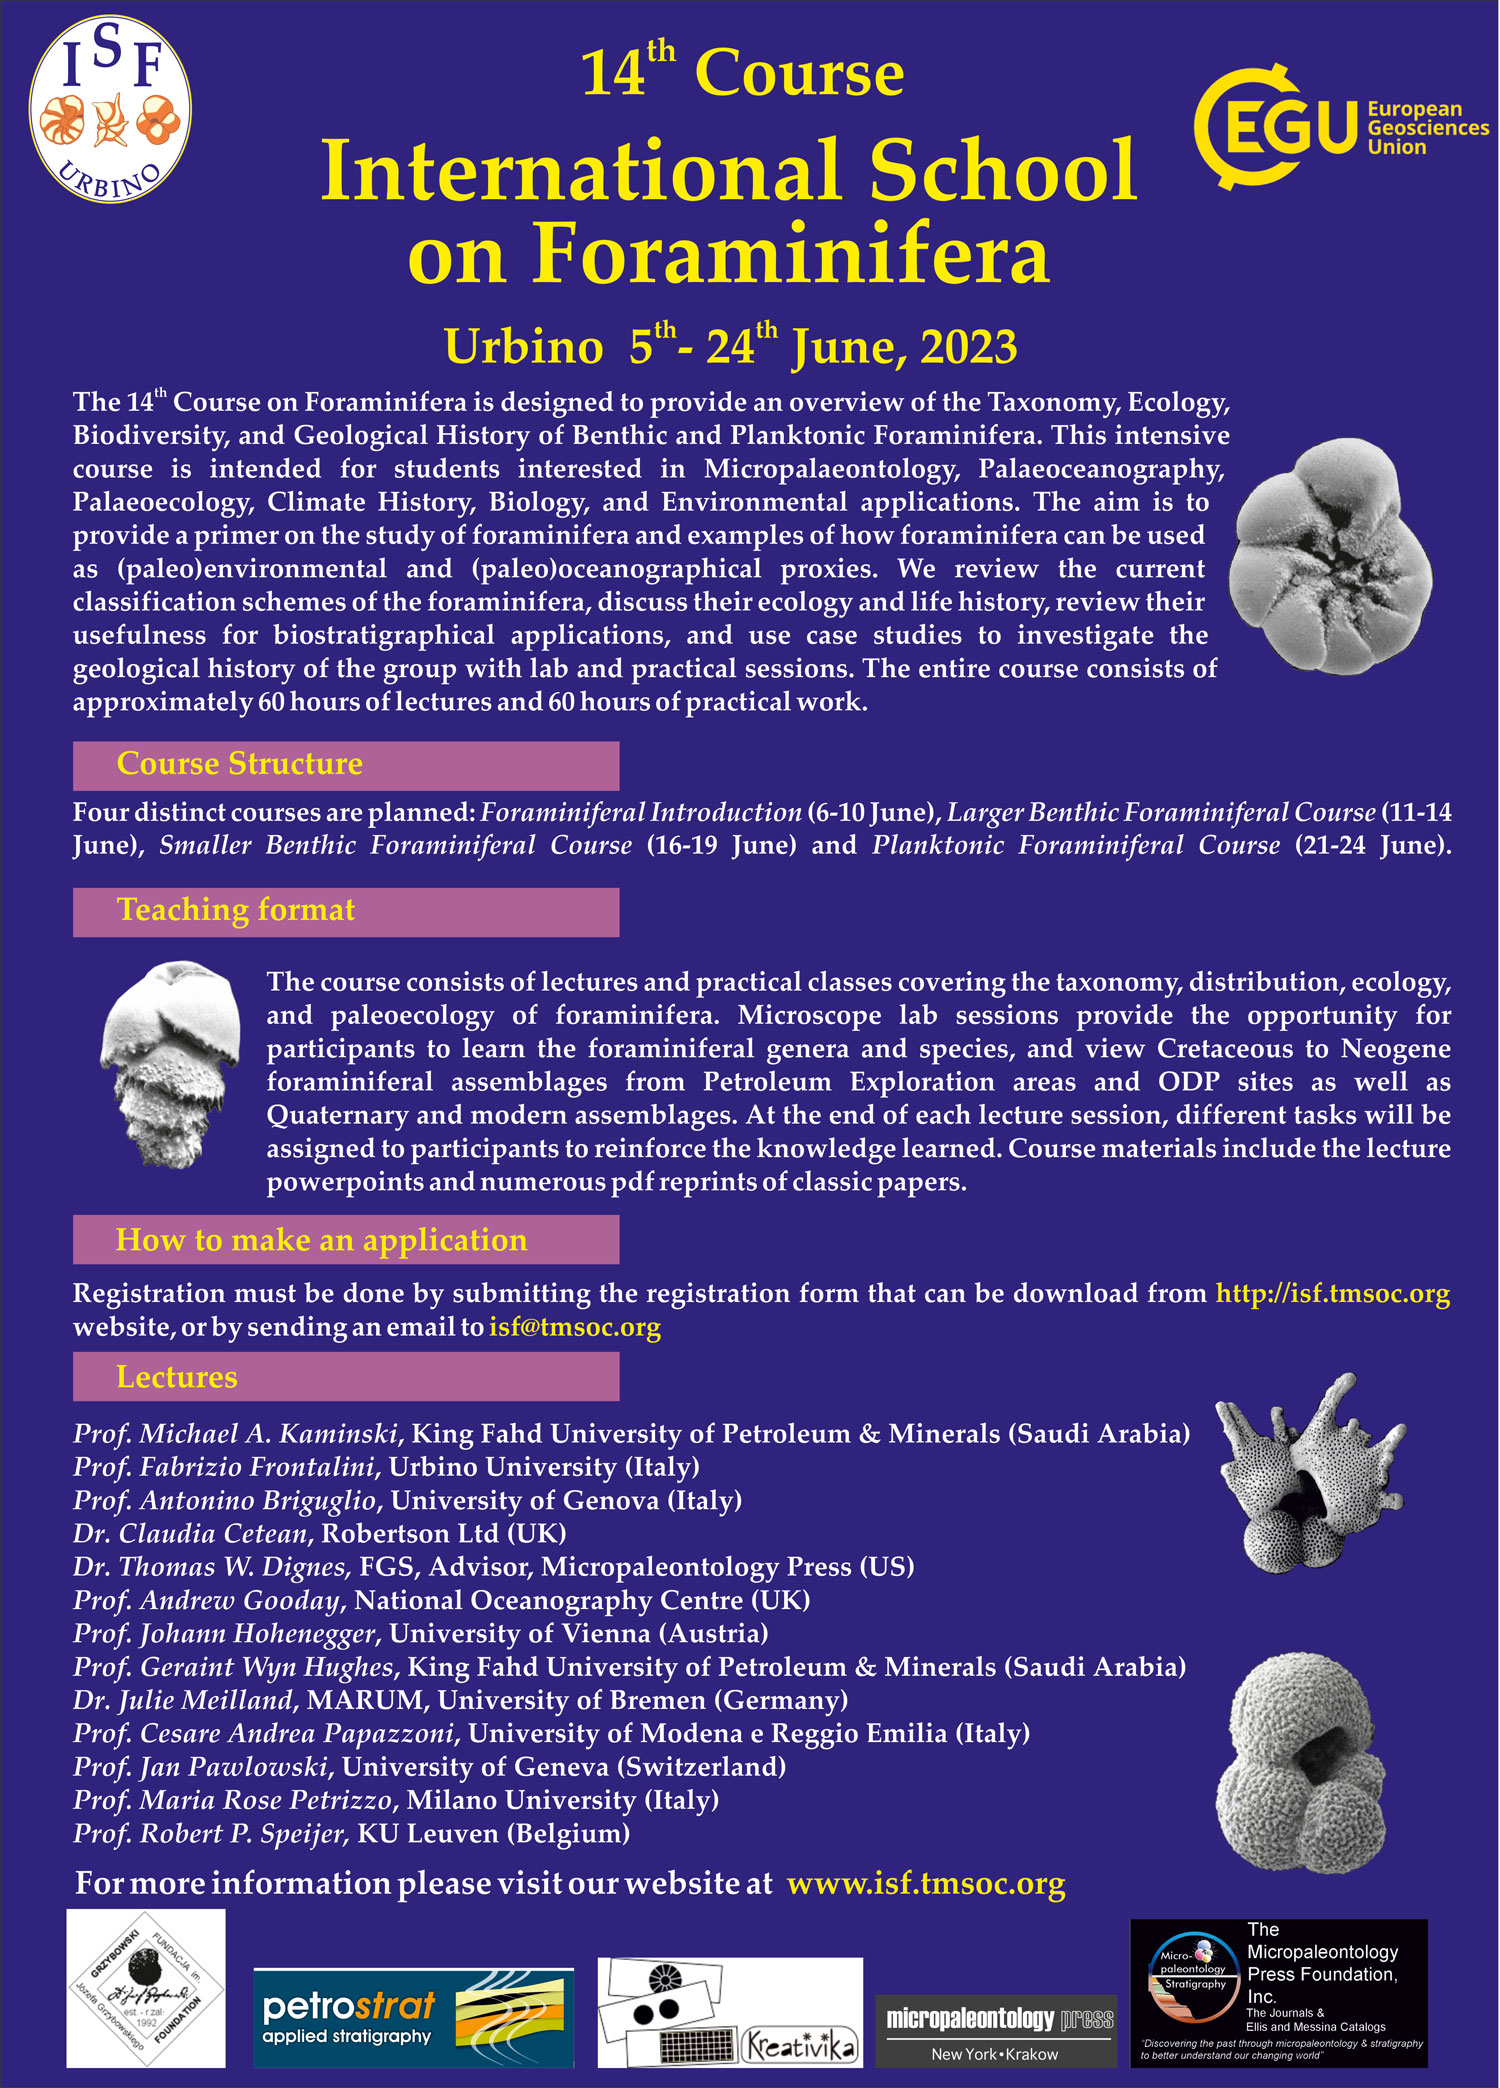 Leaflet 14th Course International School on Foraminifera